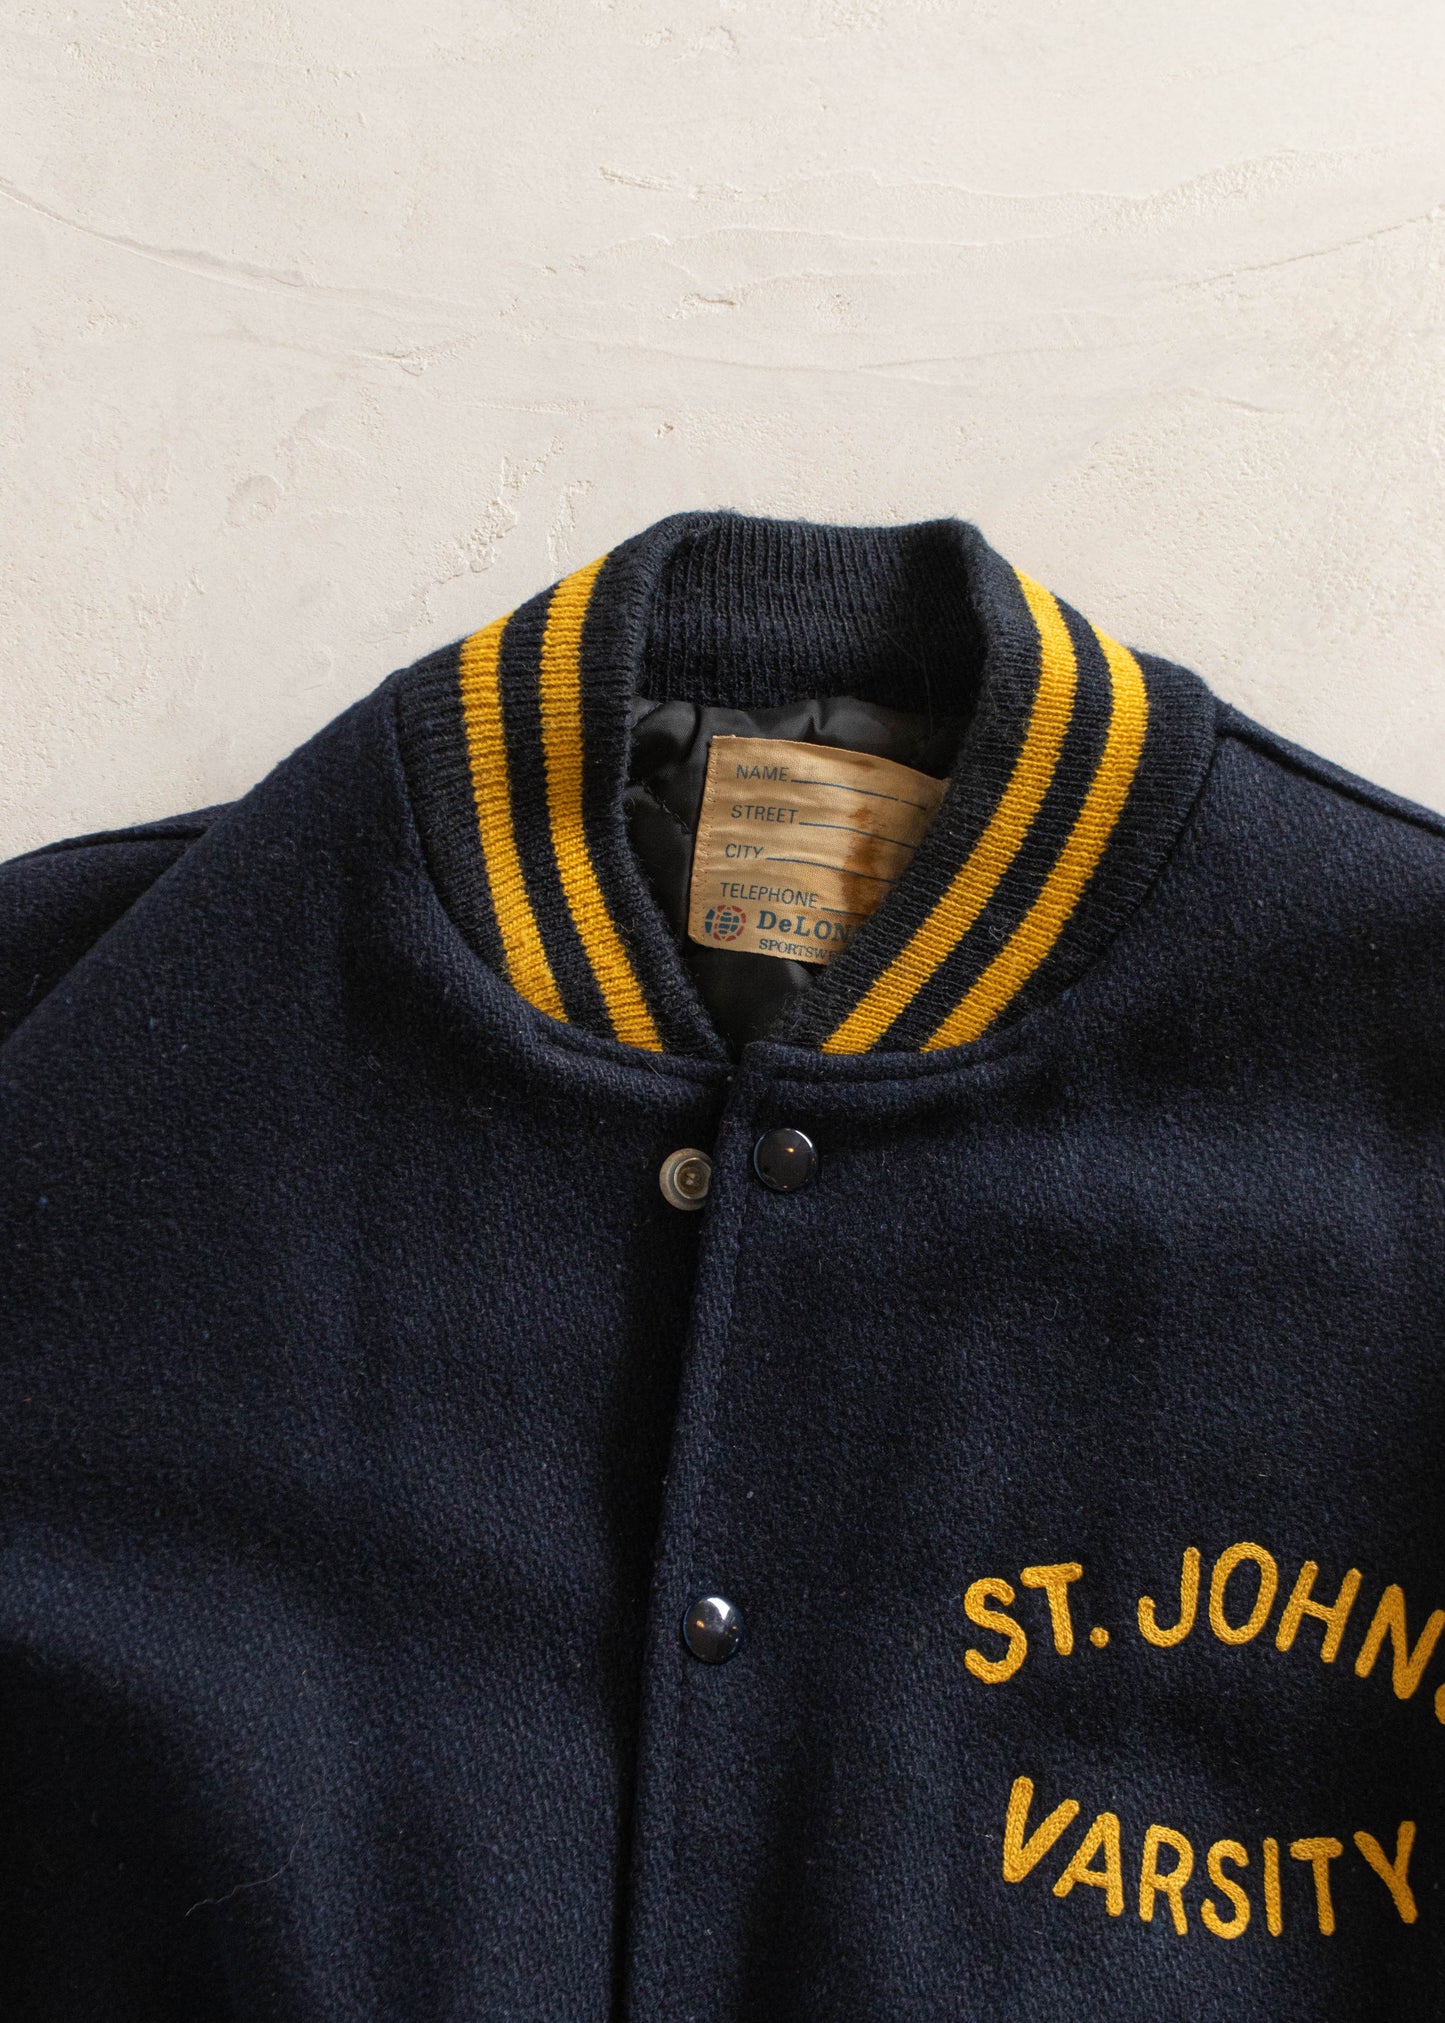 1960s DeLong Sportswear St. Johns Varsity Jacket Size M/L